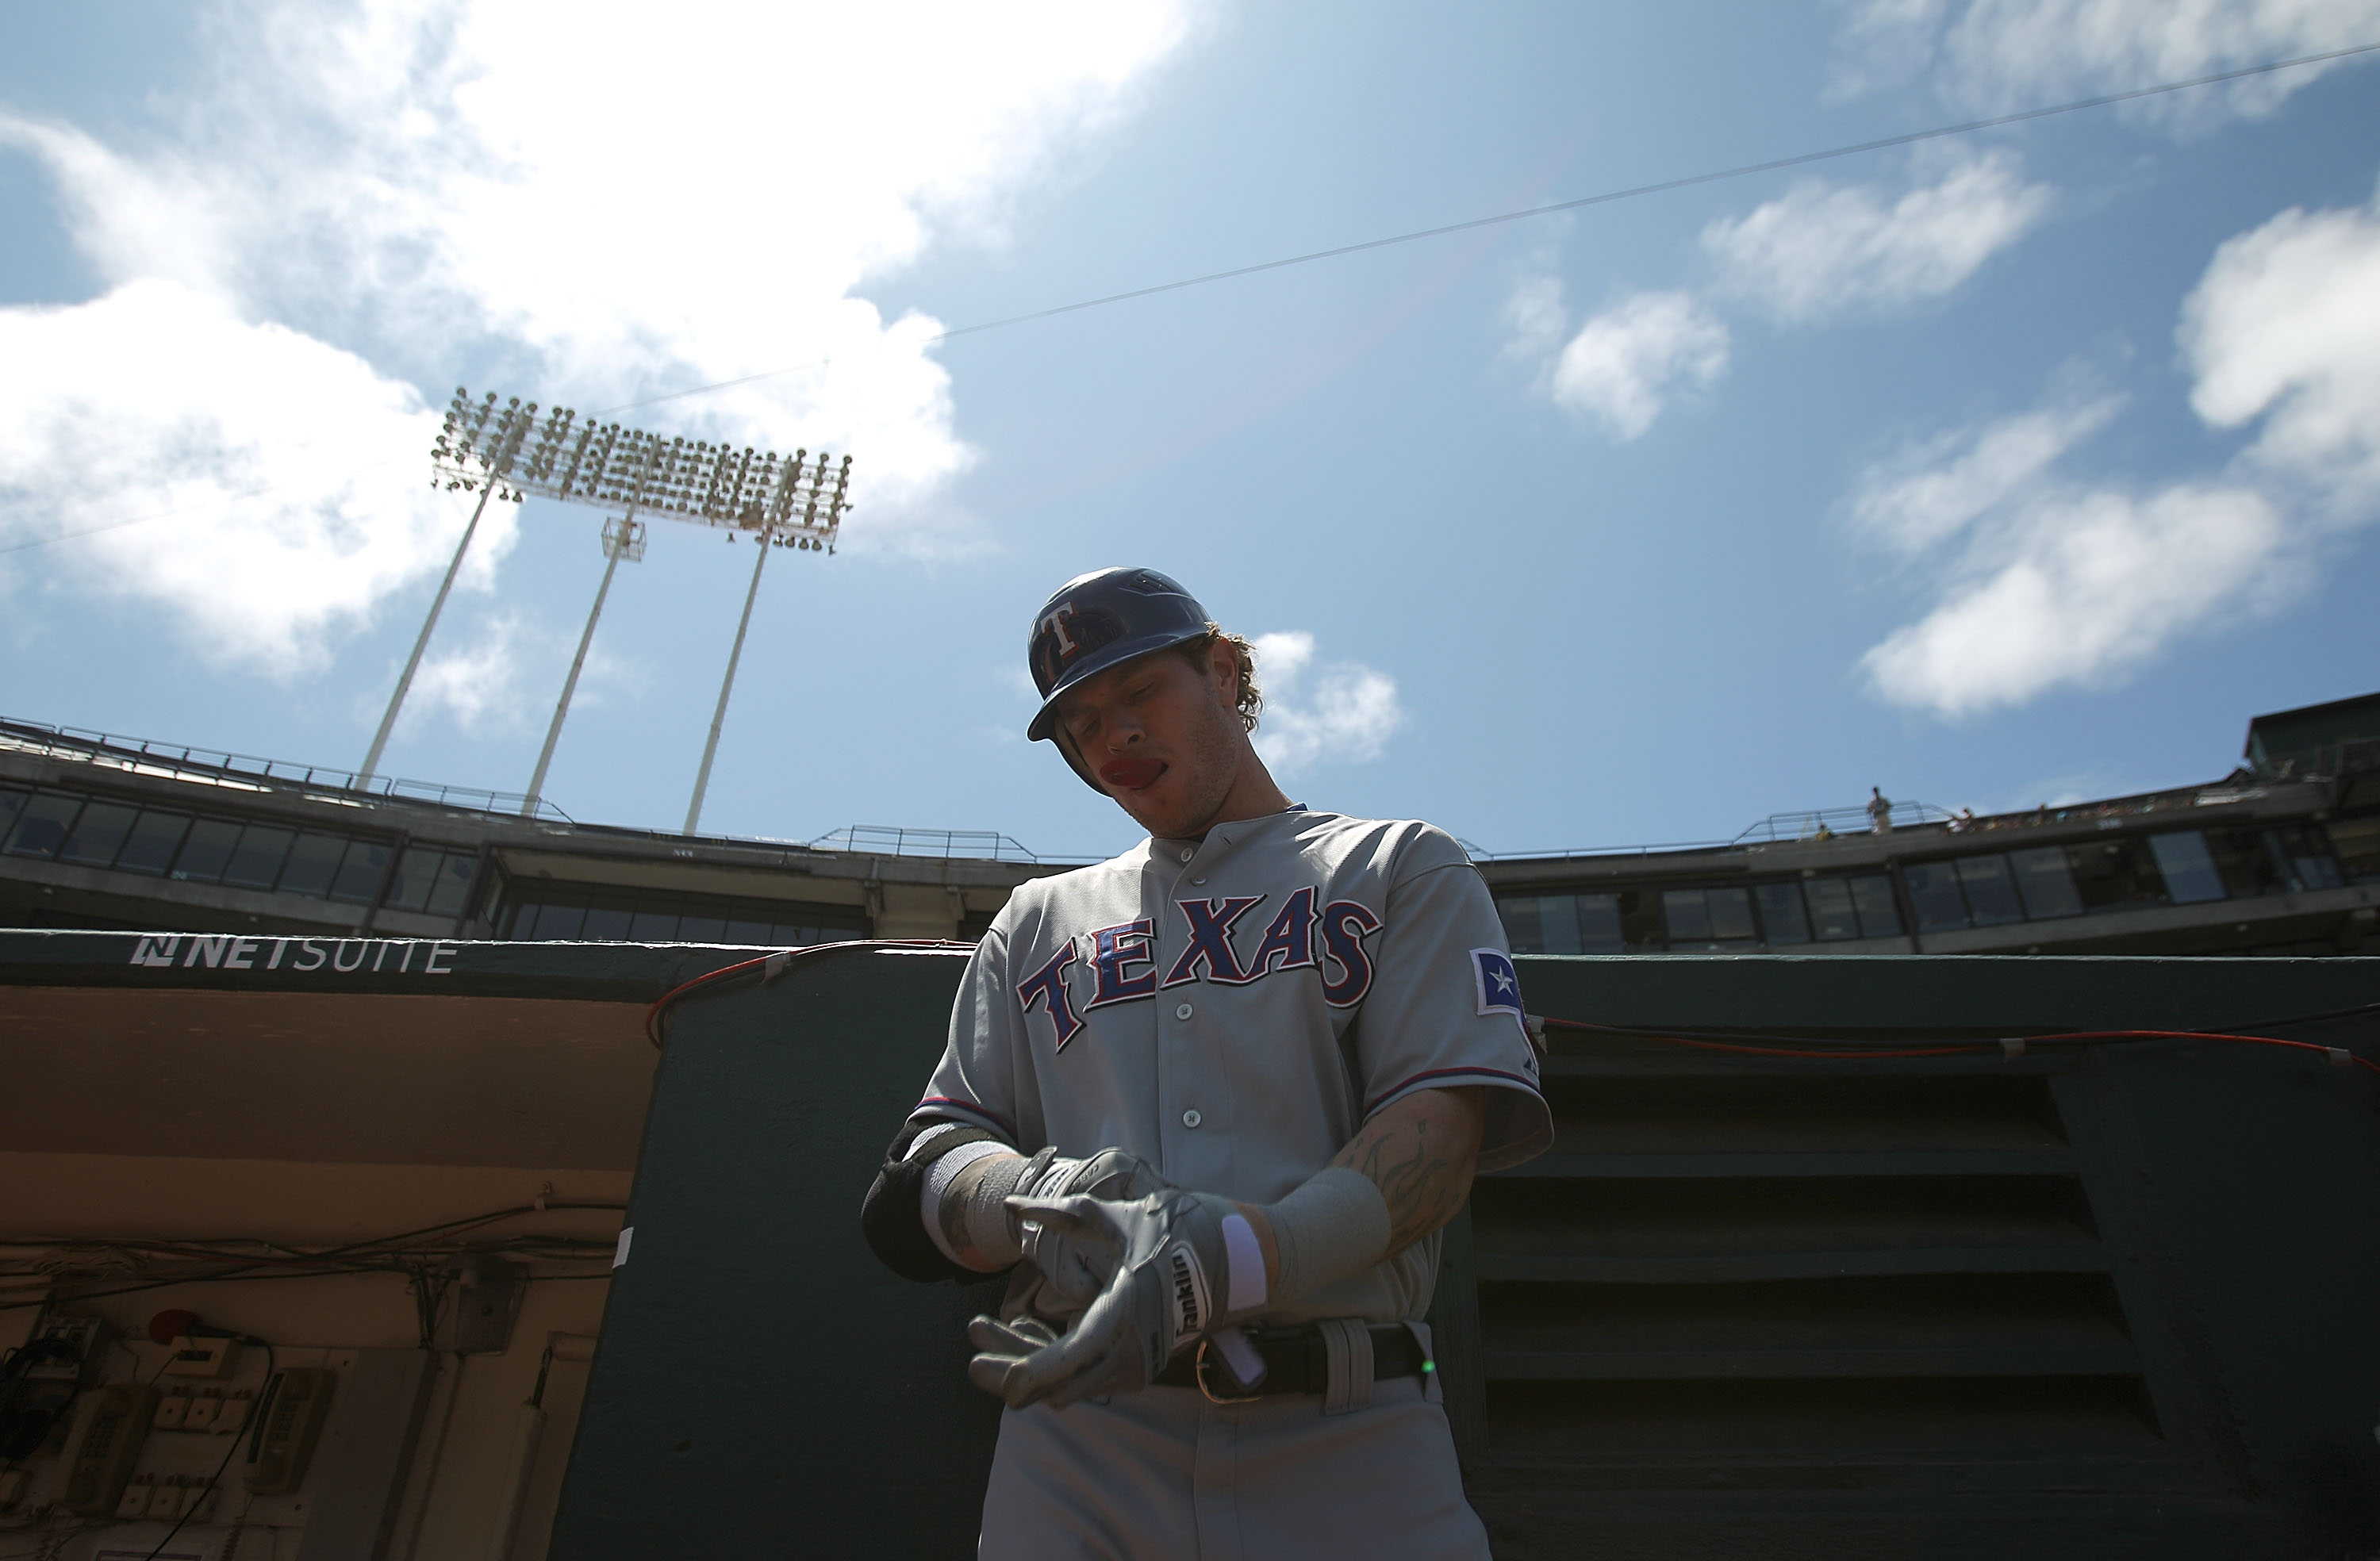 The Legend of Josh Hamilton: Tempering Enthusiasm for the Texas